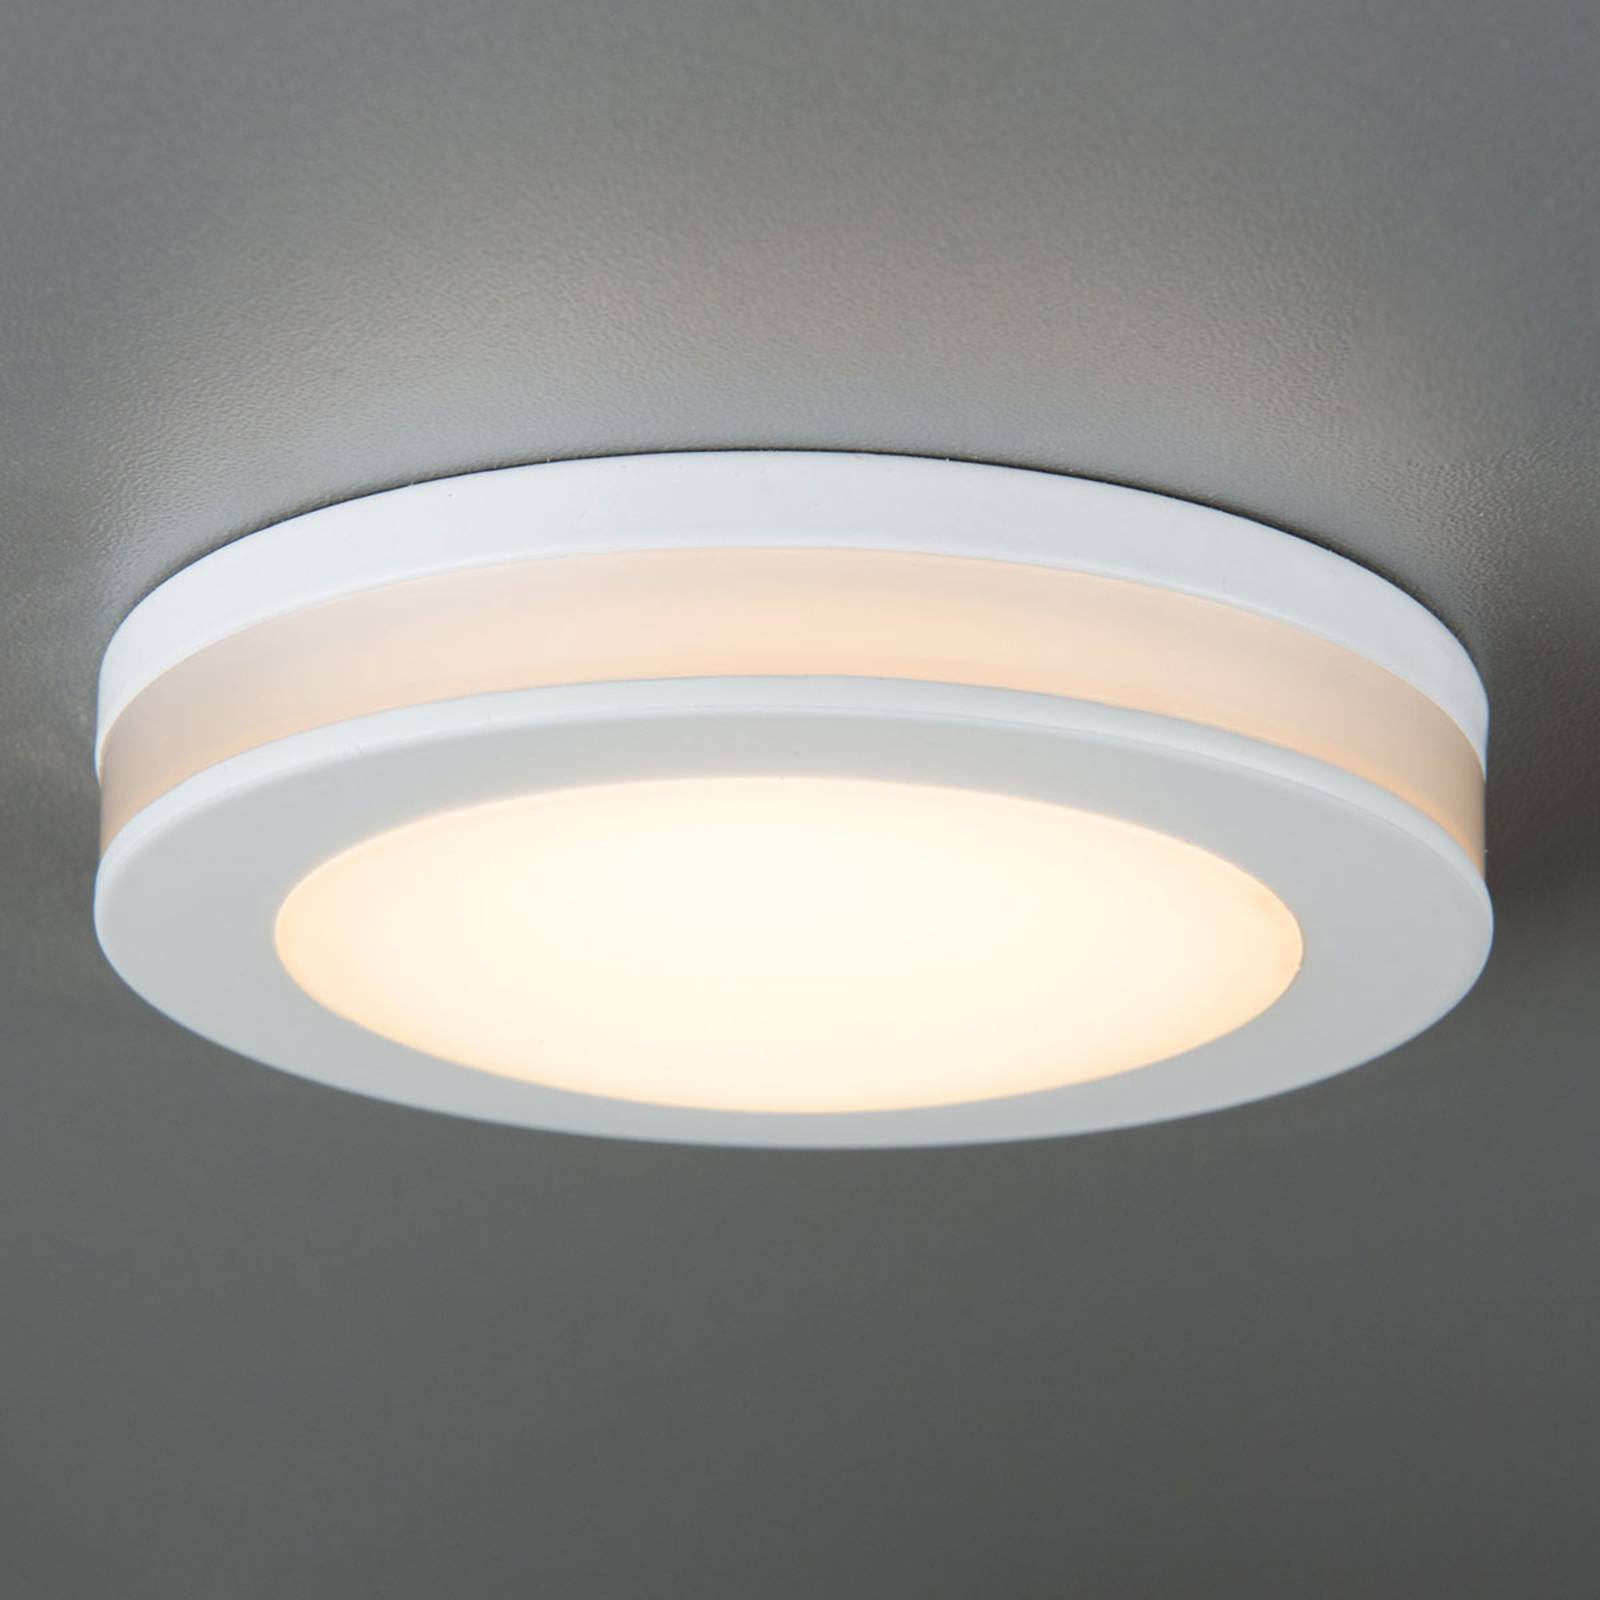 LED-Einbaustrahler Artemis 6 W weiß